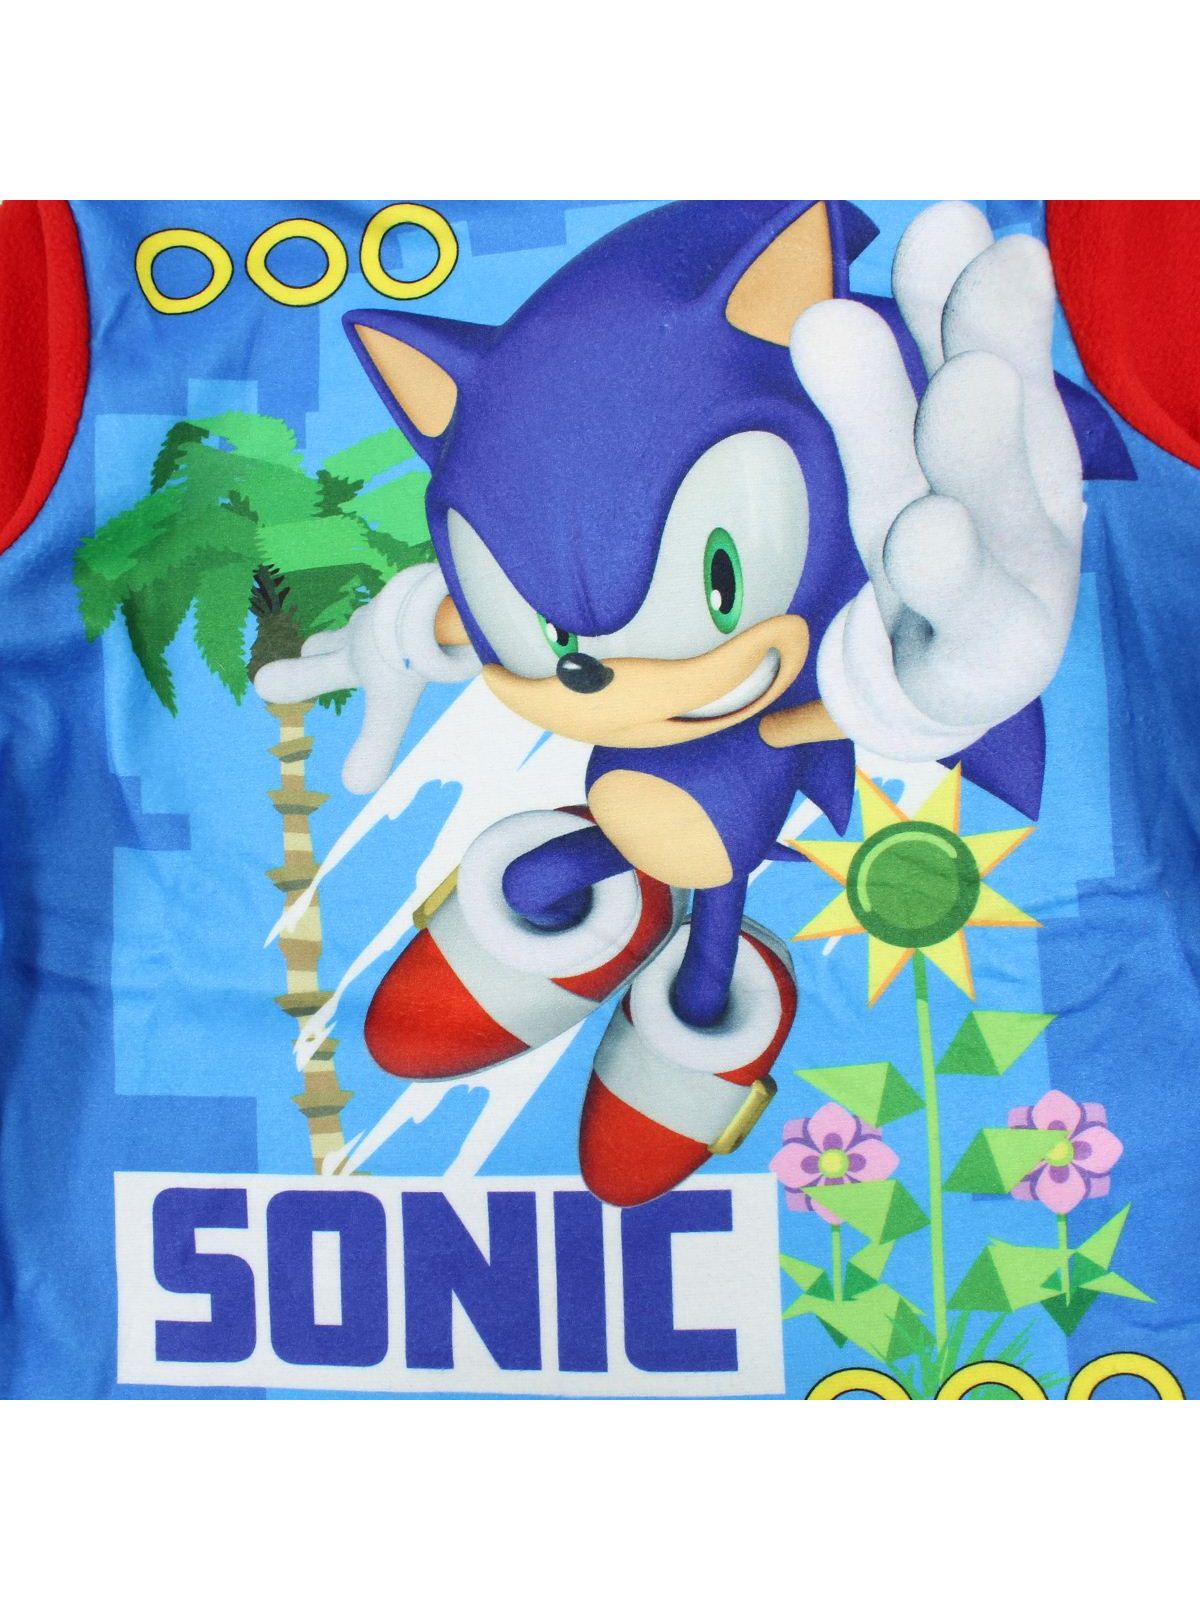 Sonic fleece pajamas